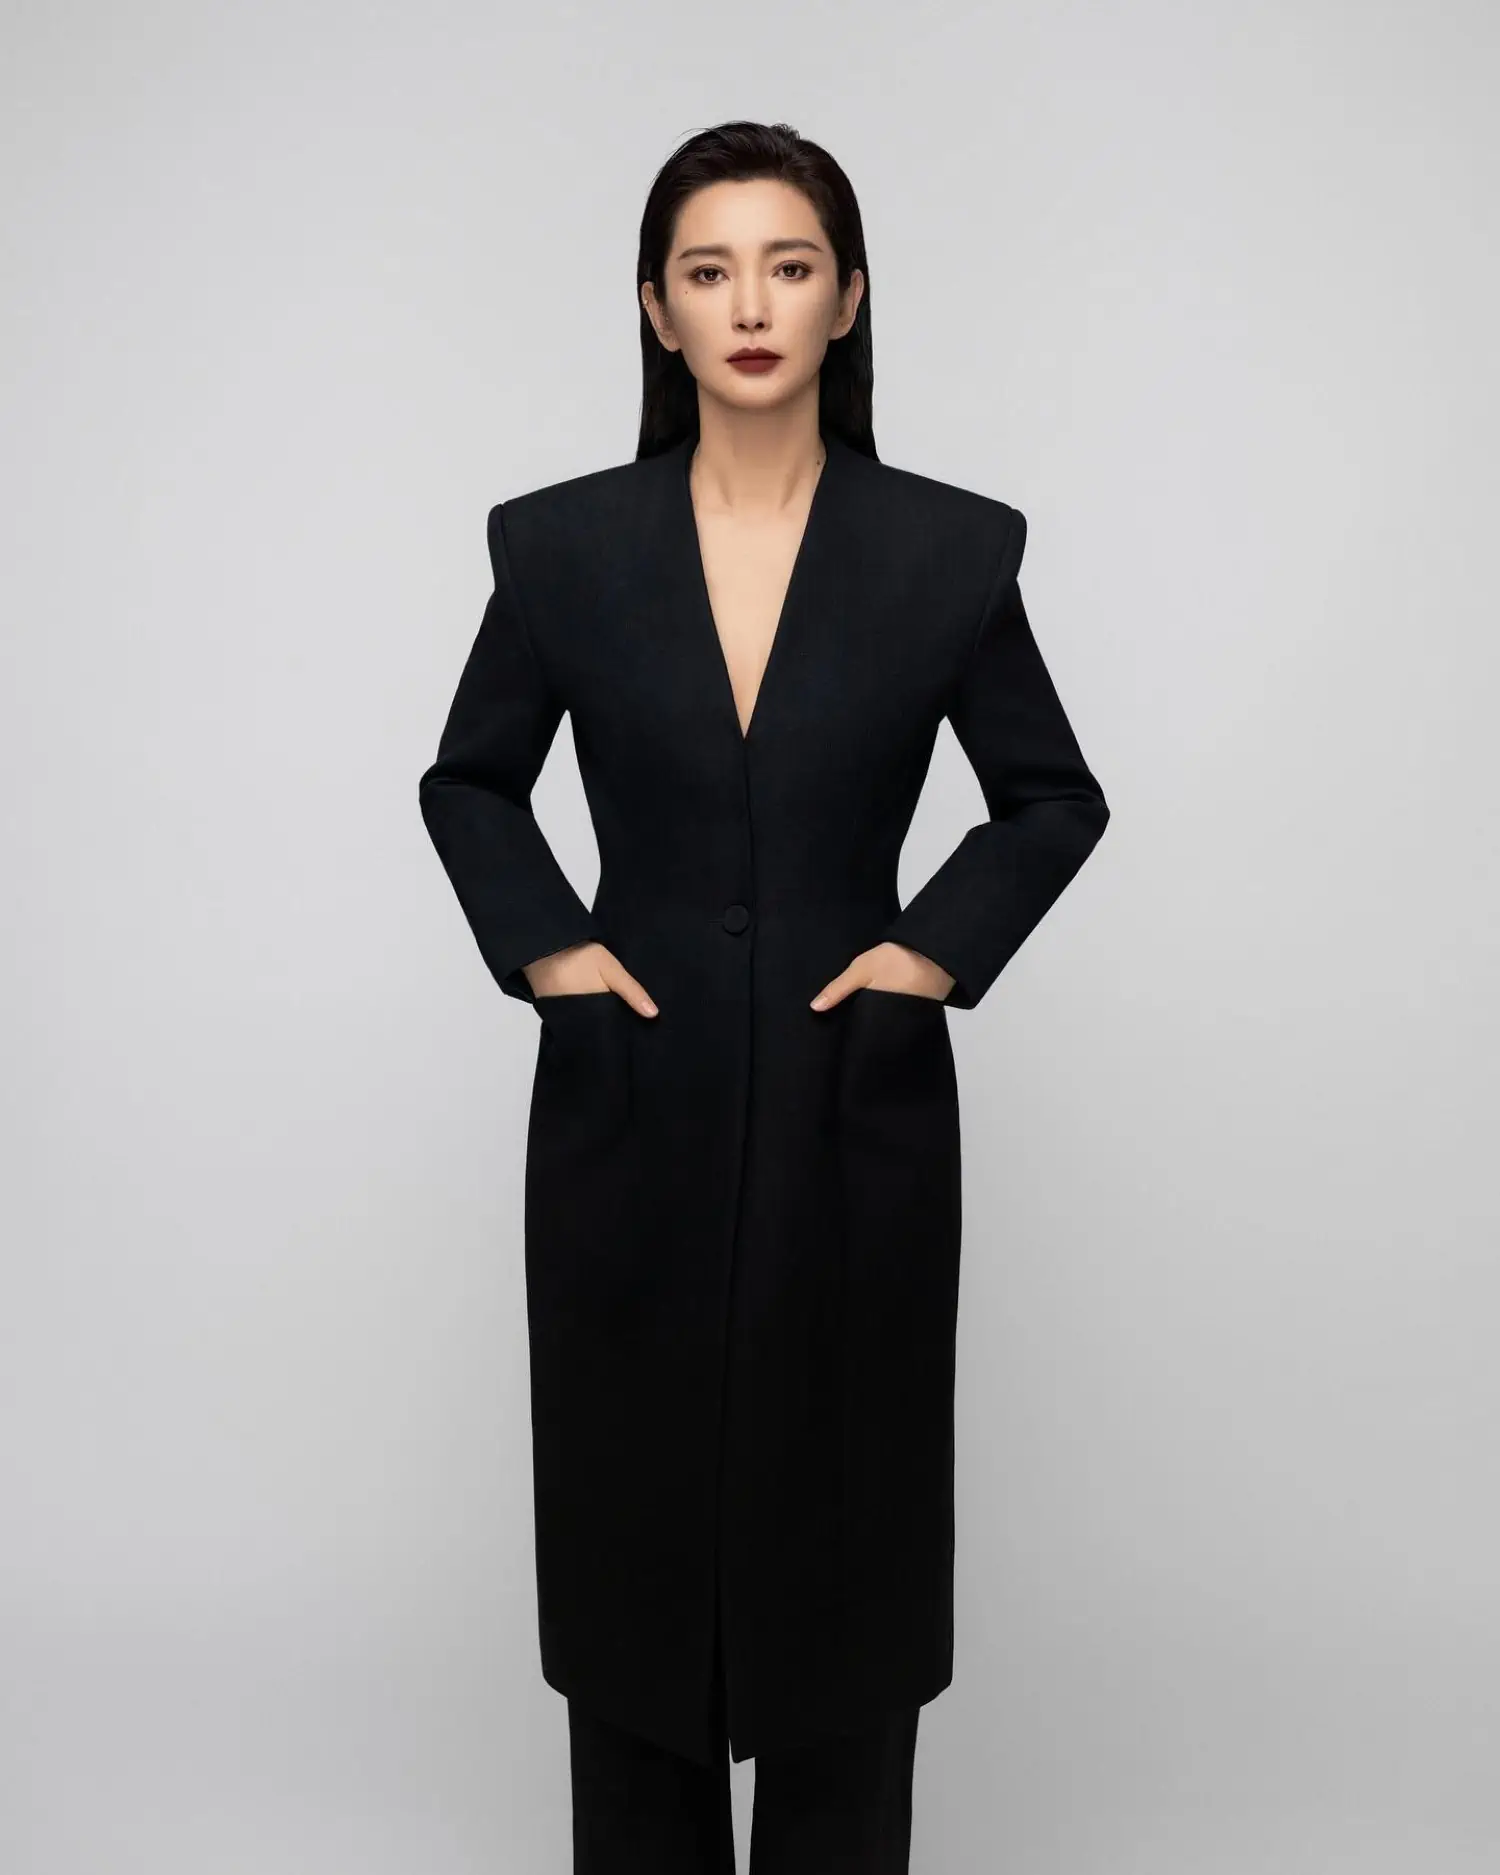 Li Bingbing joins Givenchy as brand ambassador for China